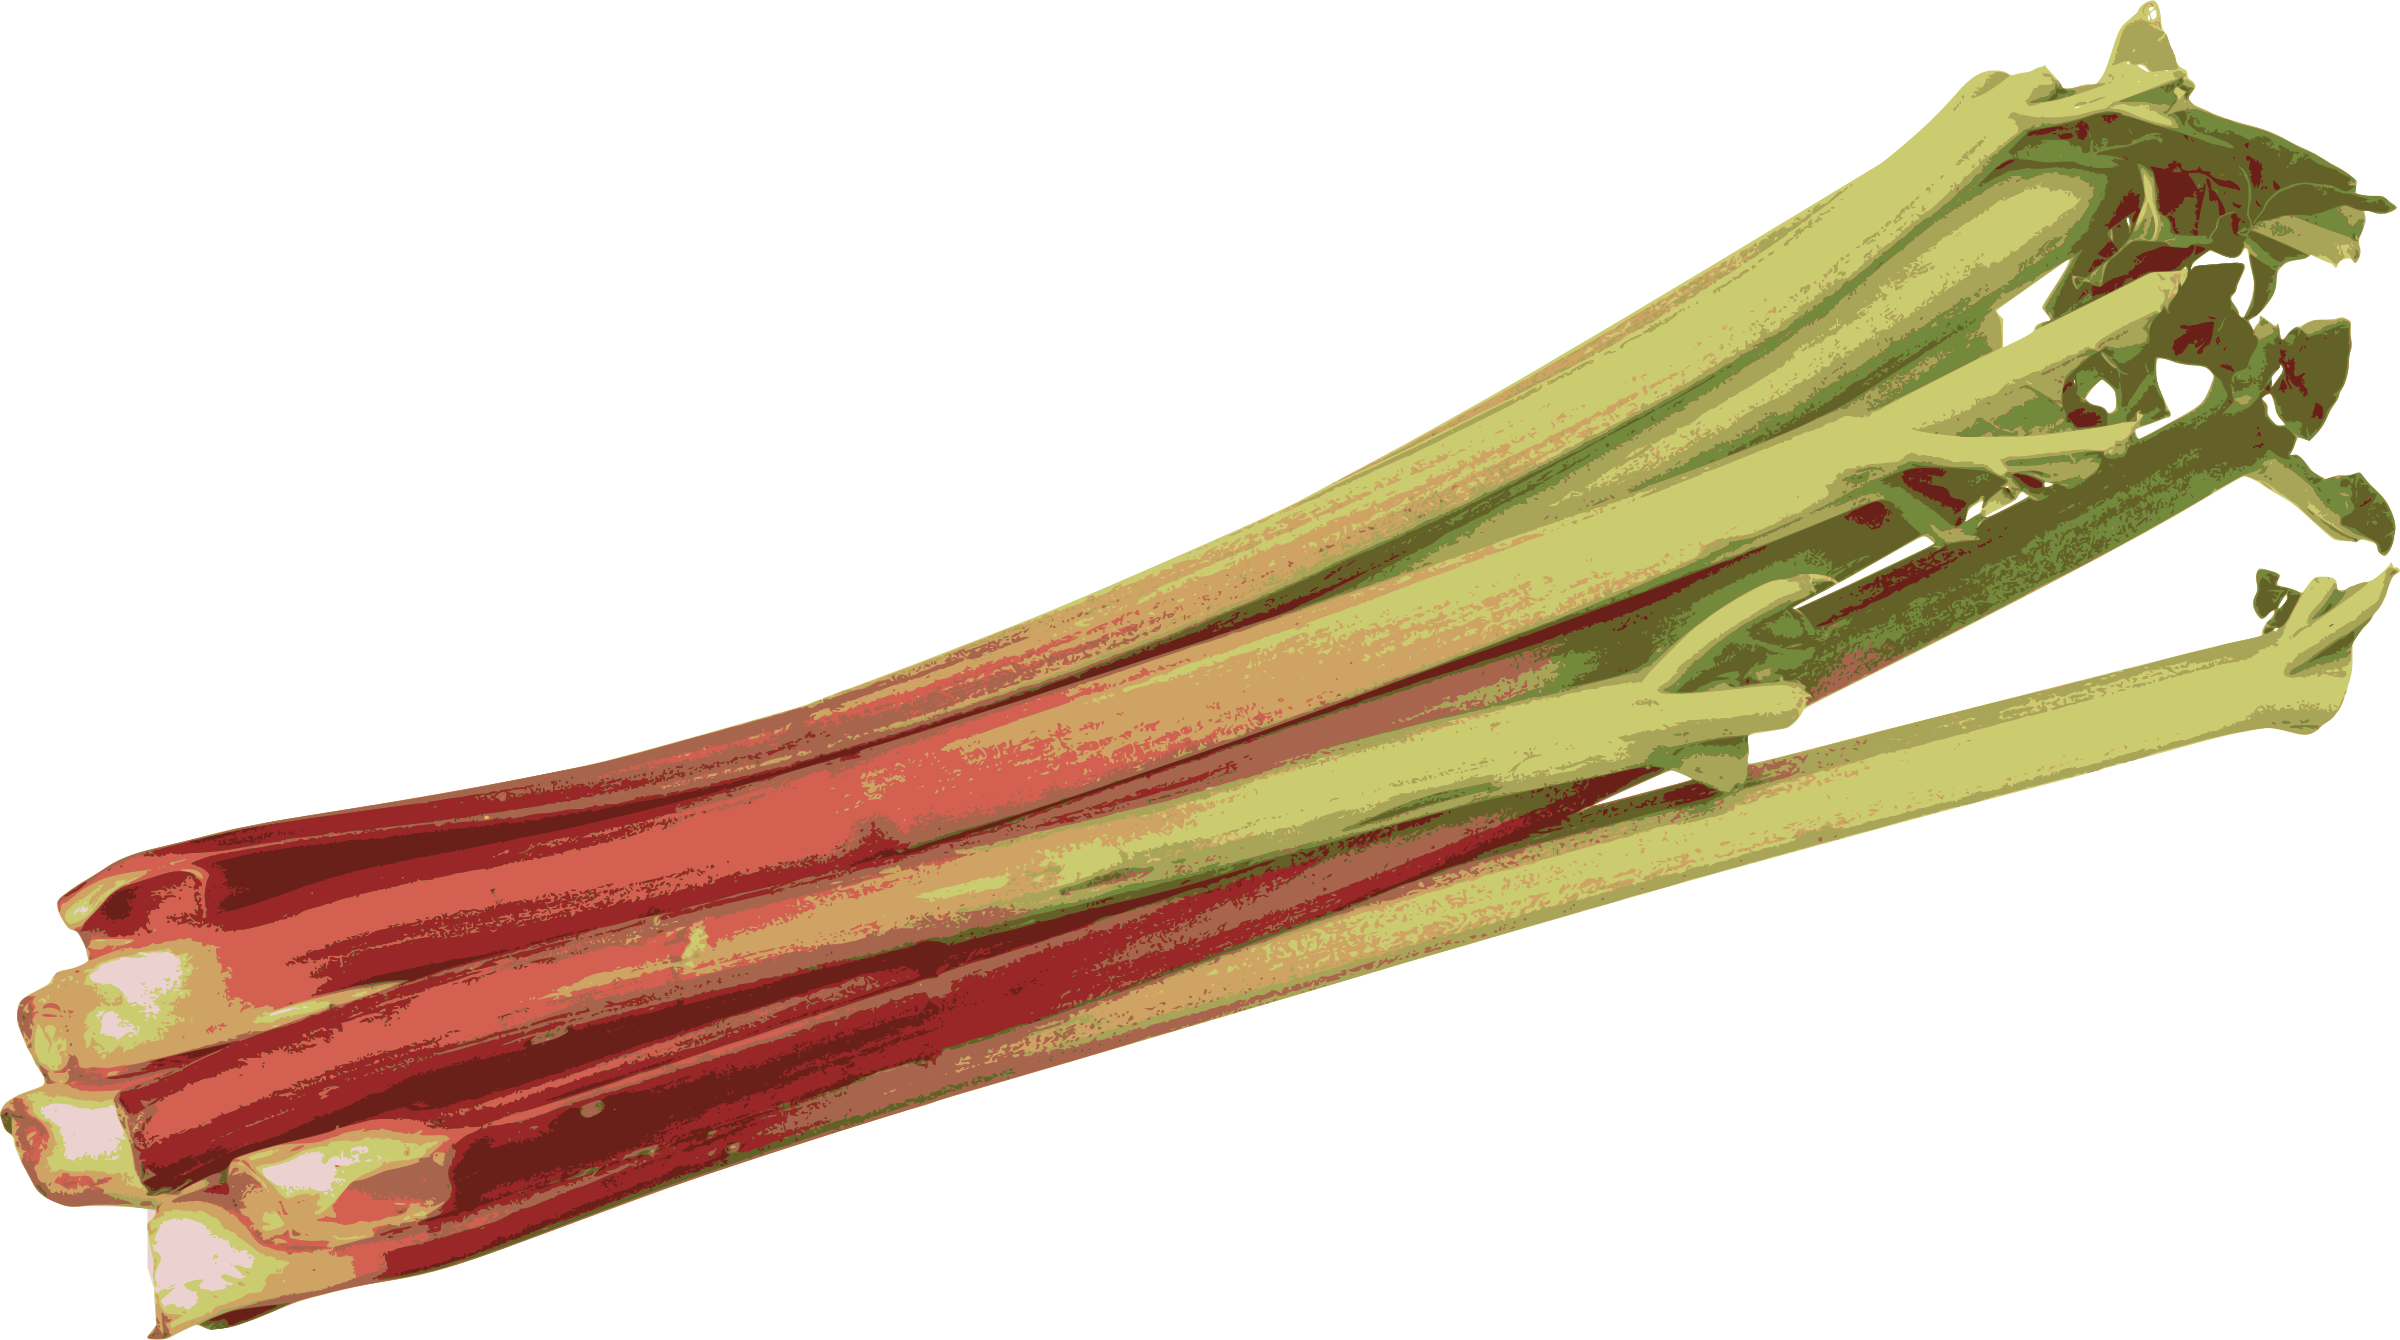 Big Image - Rhubarb (2400x1340)